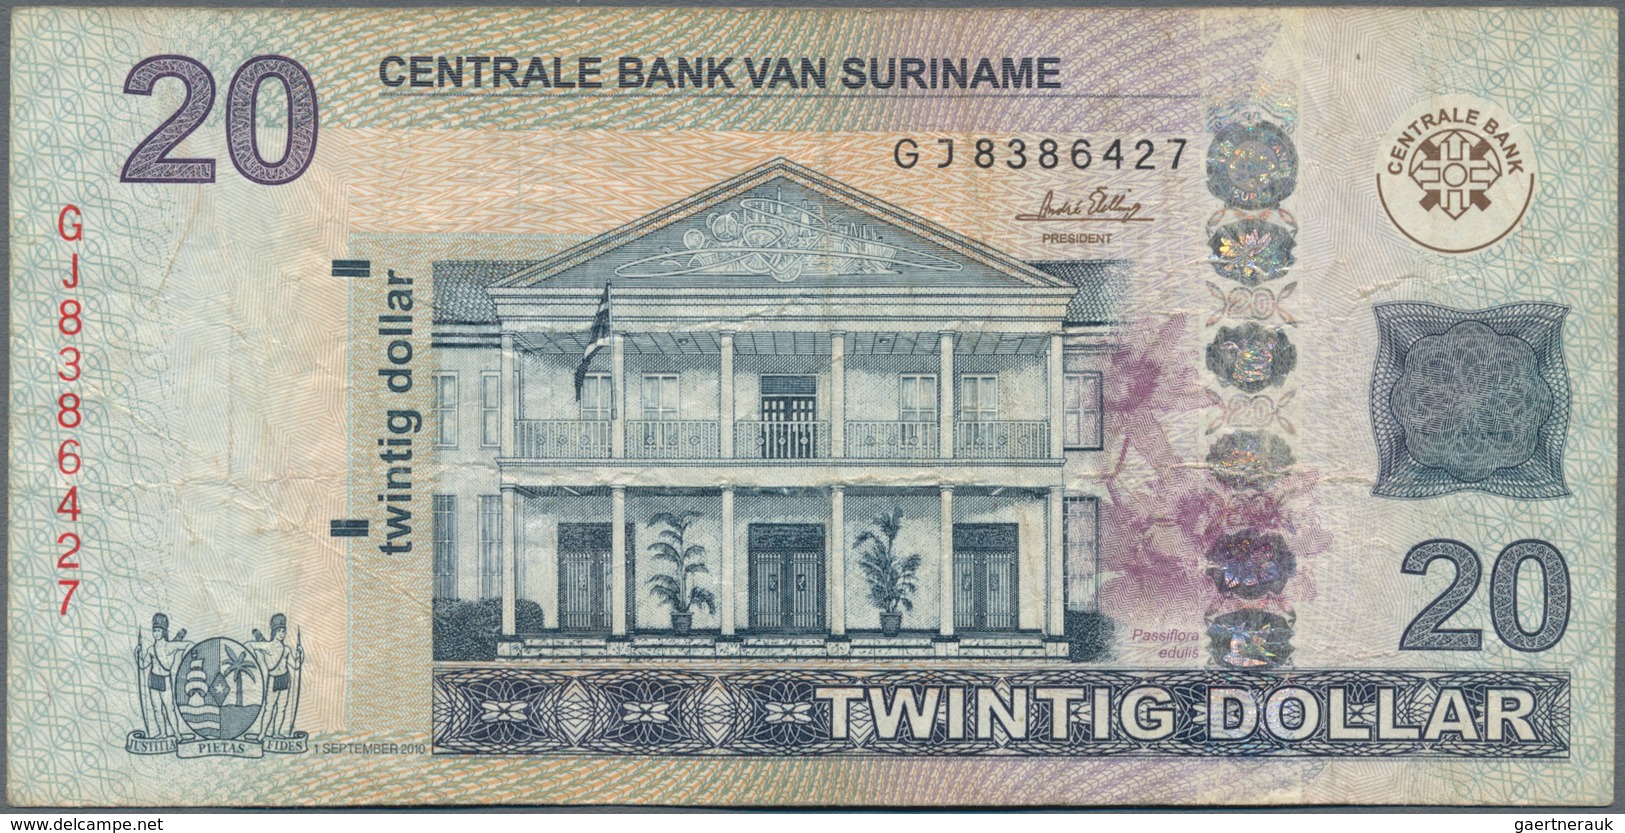 Suriname: Centrale Bank van Suriname nice lot with 13 banknotes, comprising 2x 1 Gulden 1963 (F), 4x